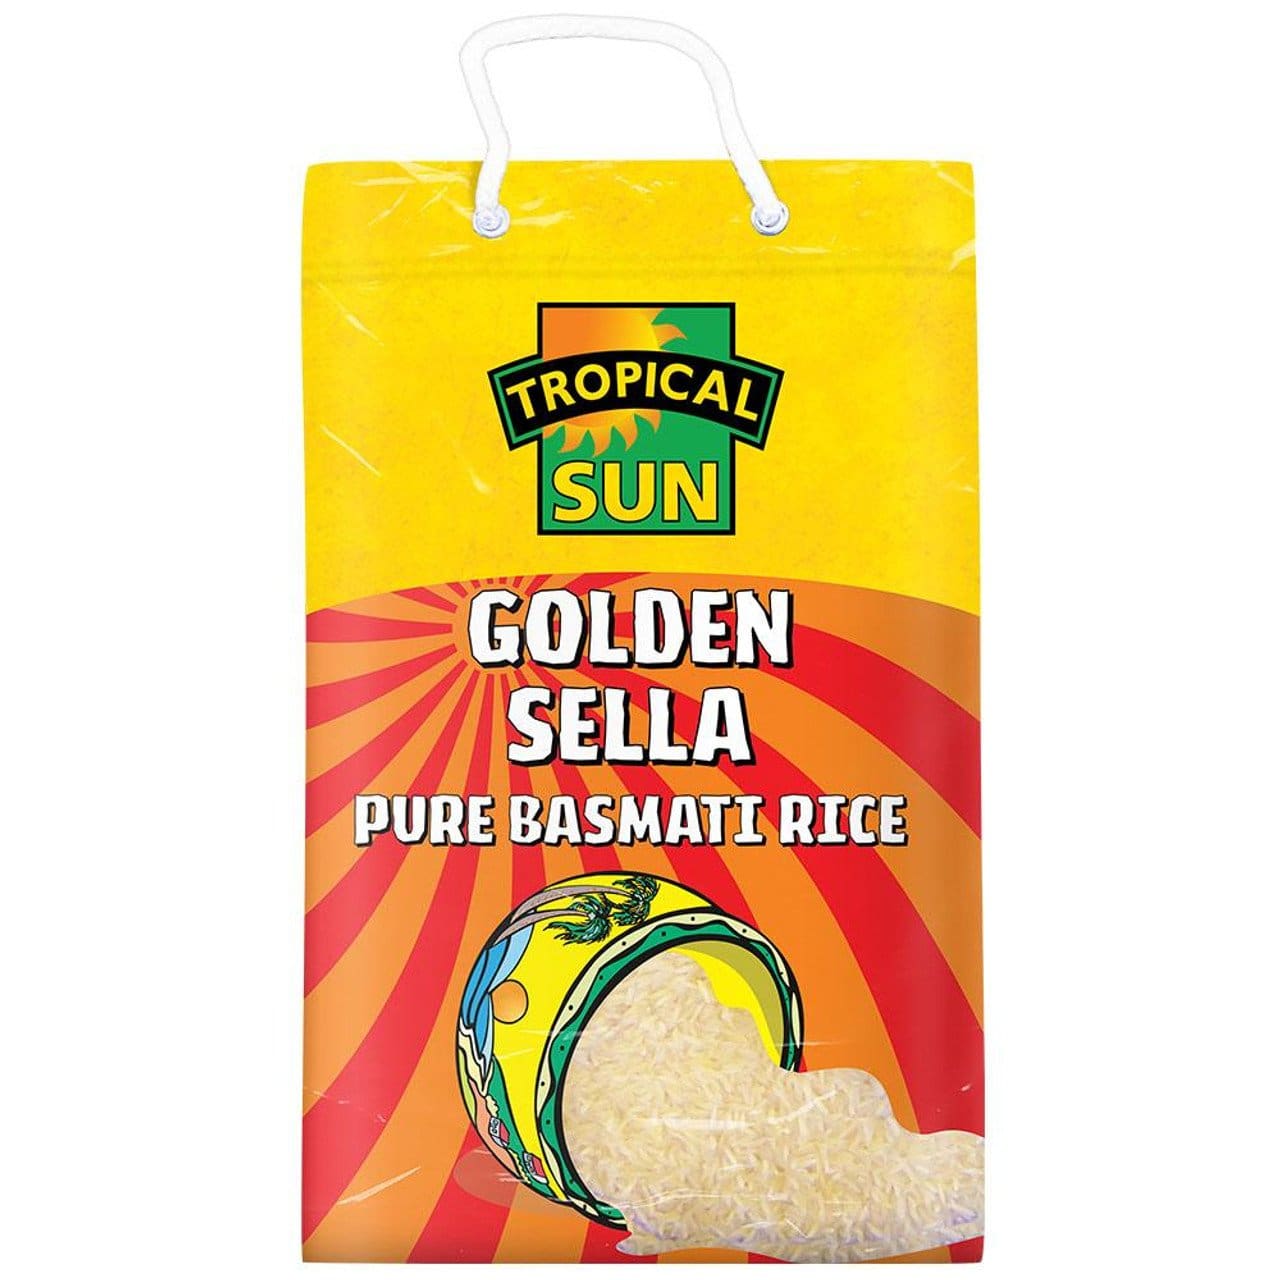 Tropical Sun Golden Sella Pure Basmati Rice